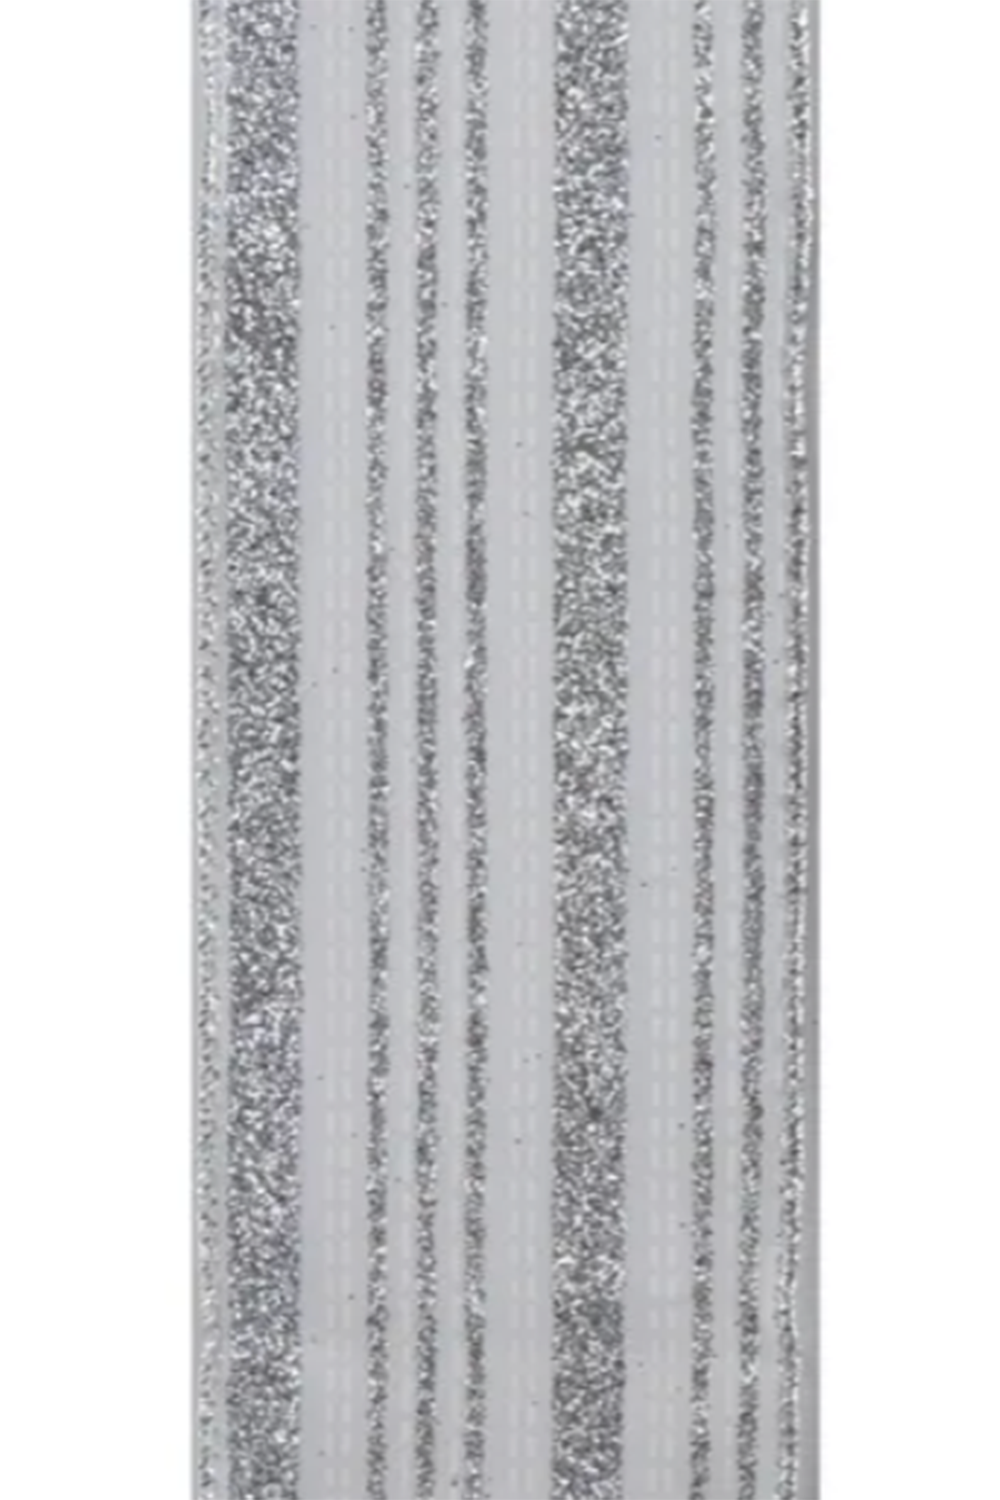 Decorating Ribbon - Woven Silver Stripe